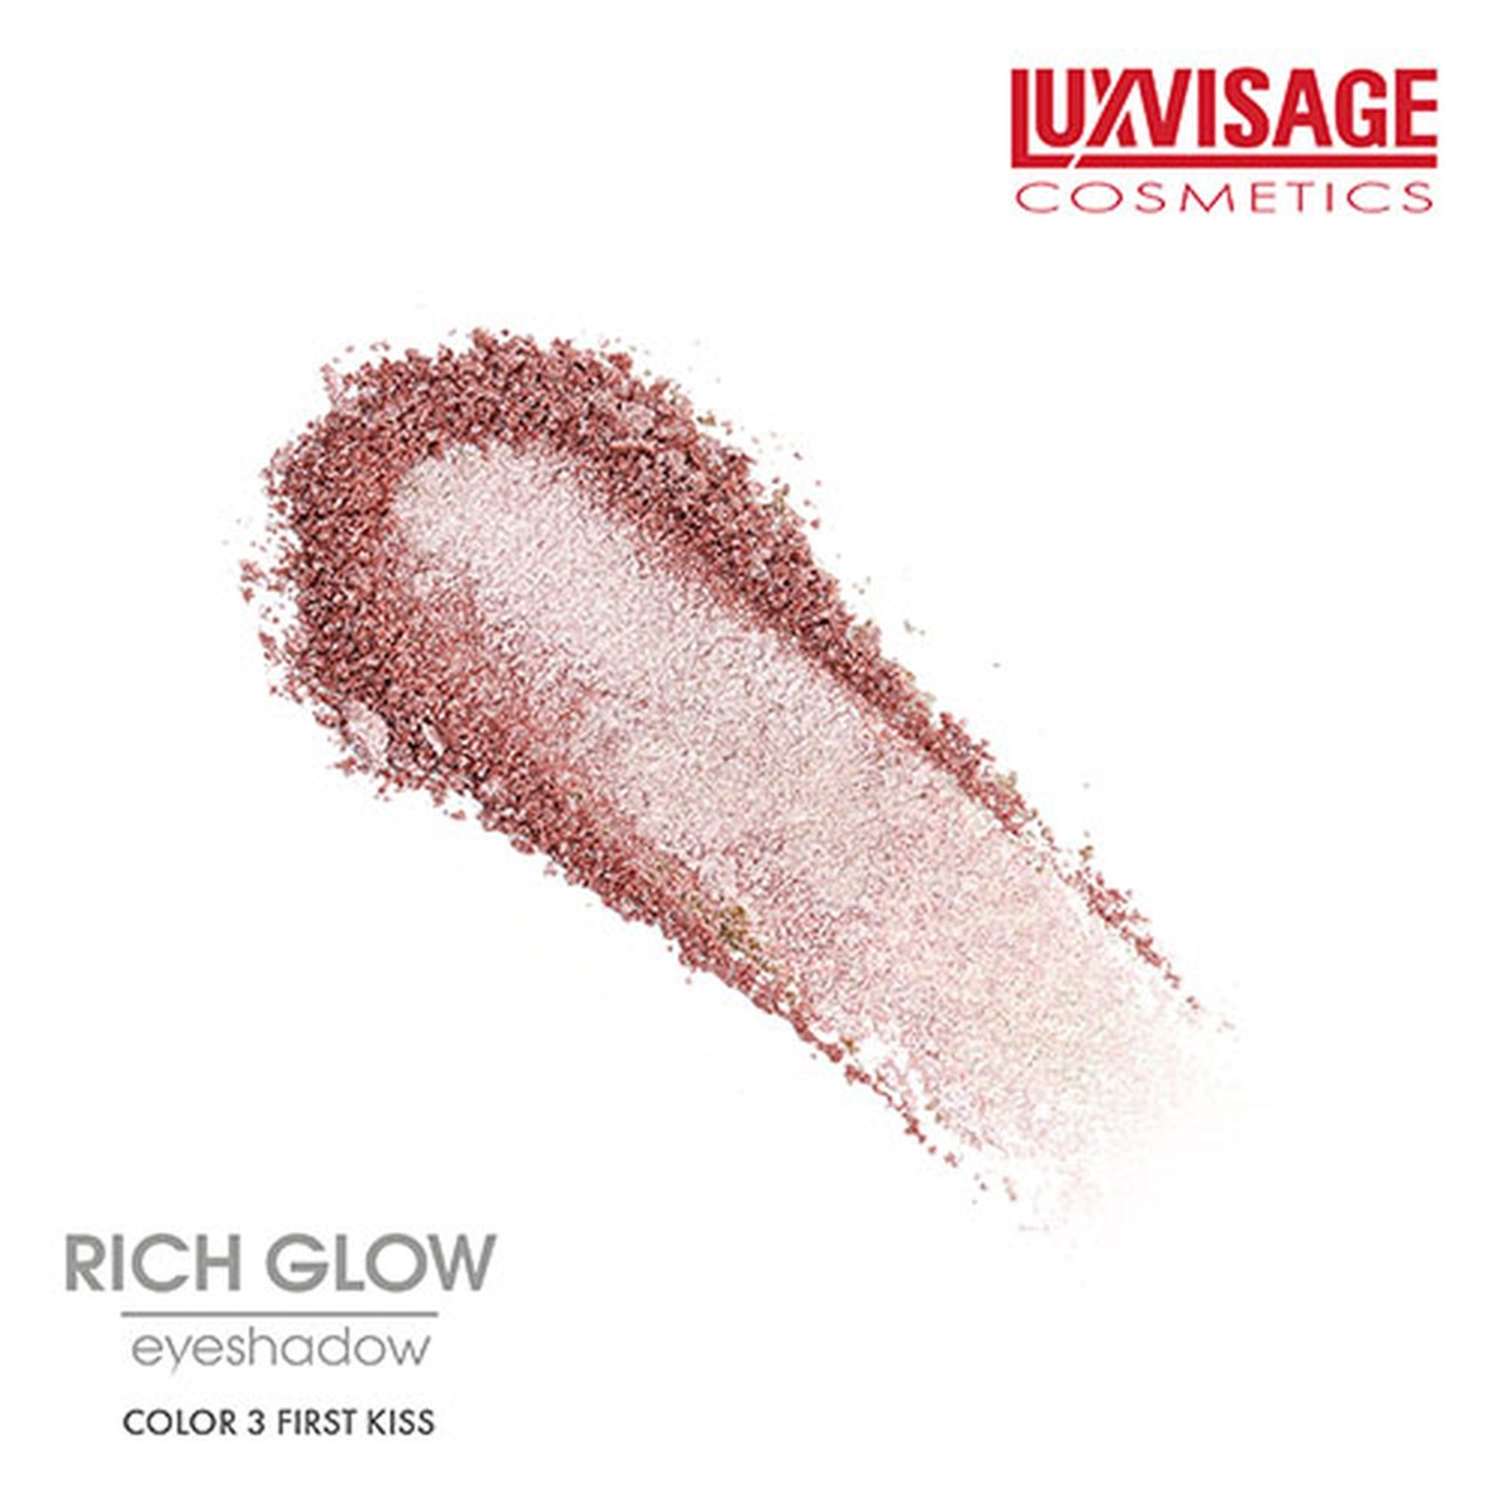 Тени для век Luxvisage Rich glow тон 3 first kiss - фото 2